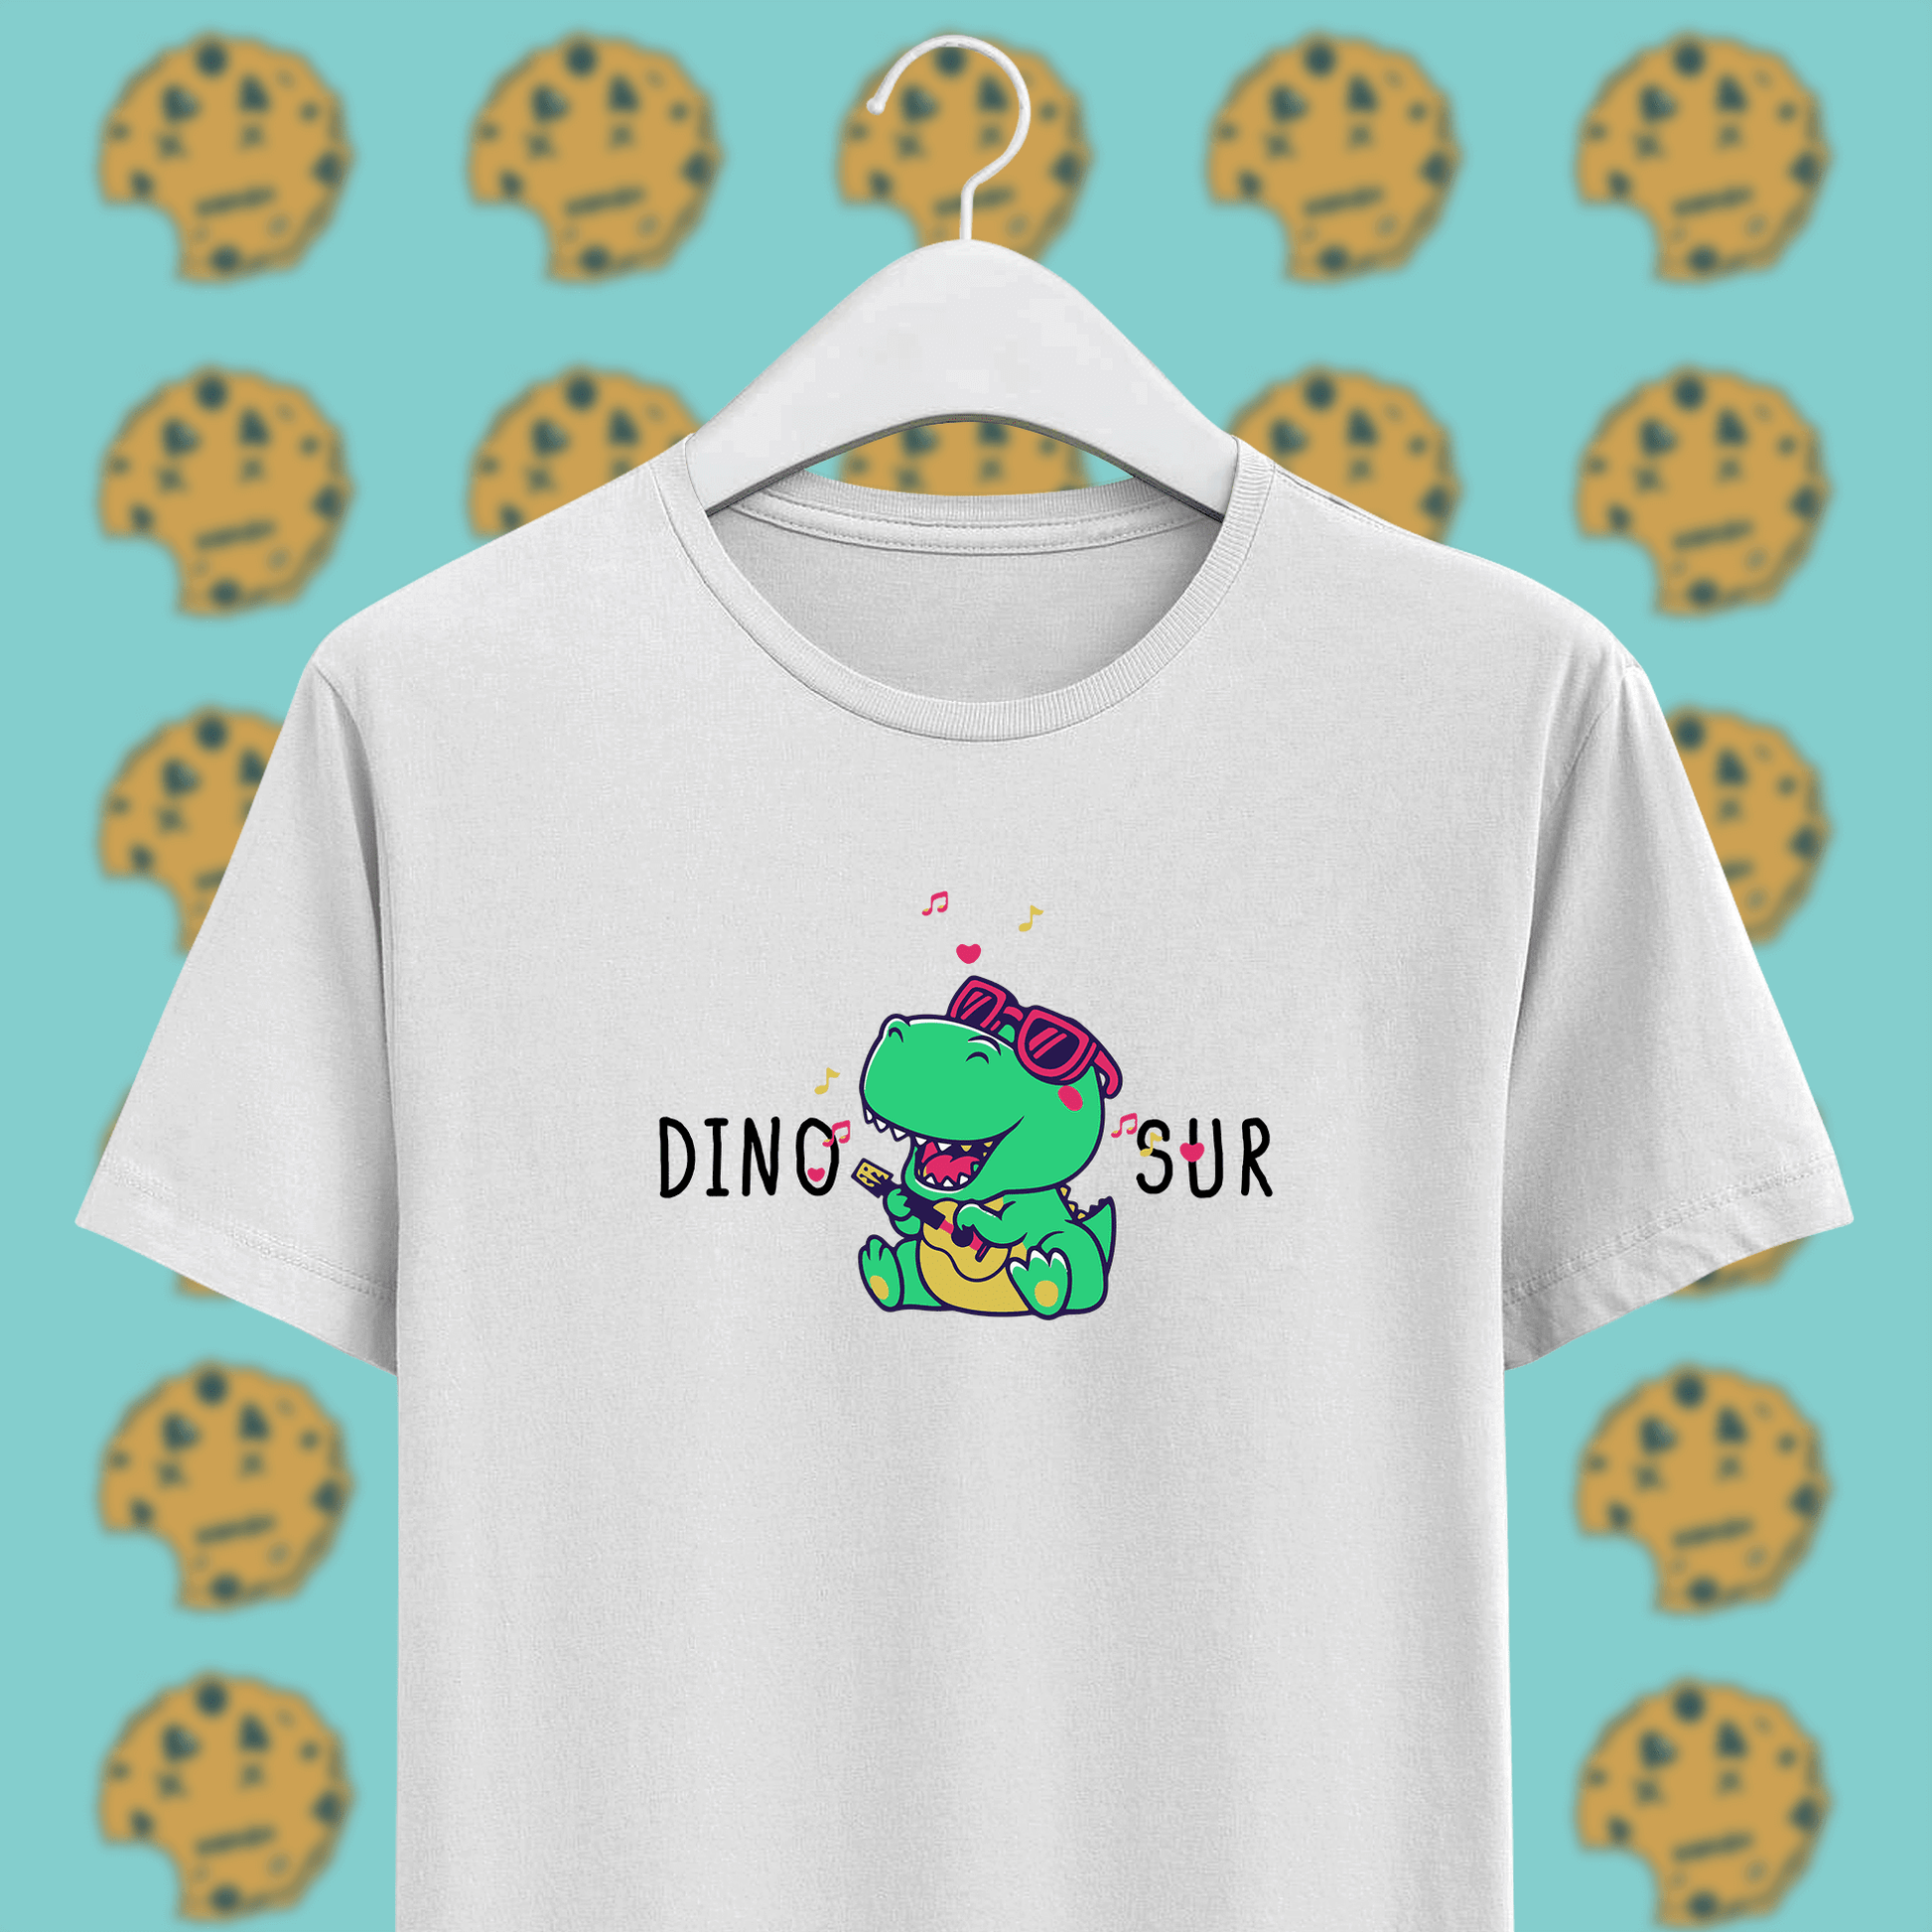 singing dinosaur on white unisex cotton t-shirt, funny pun 